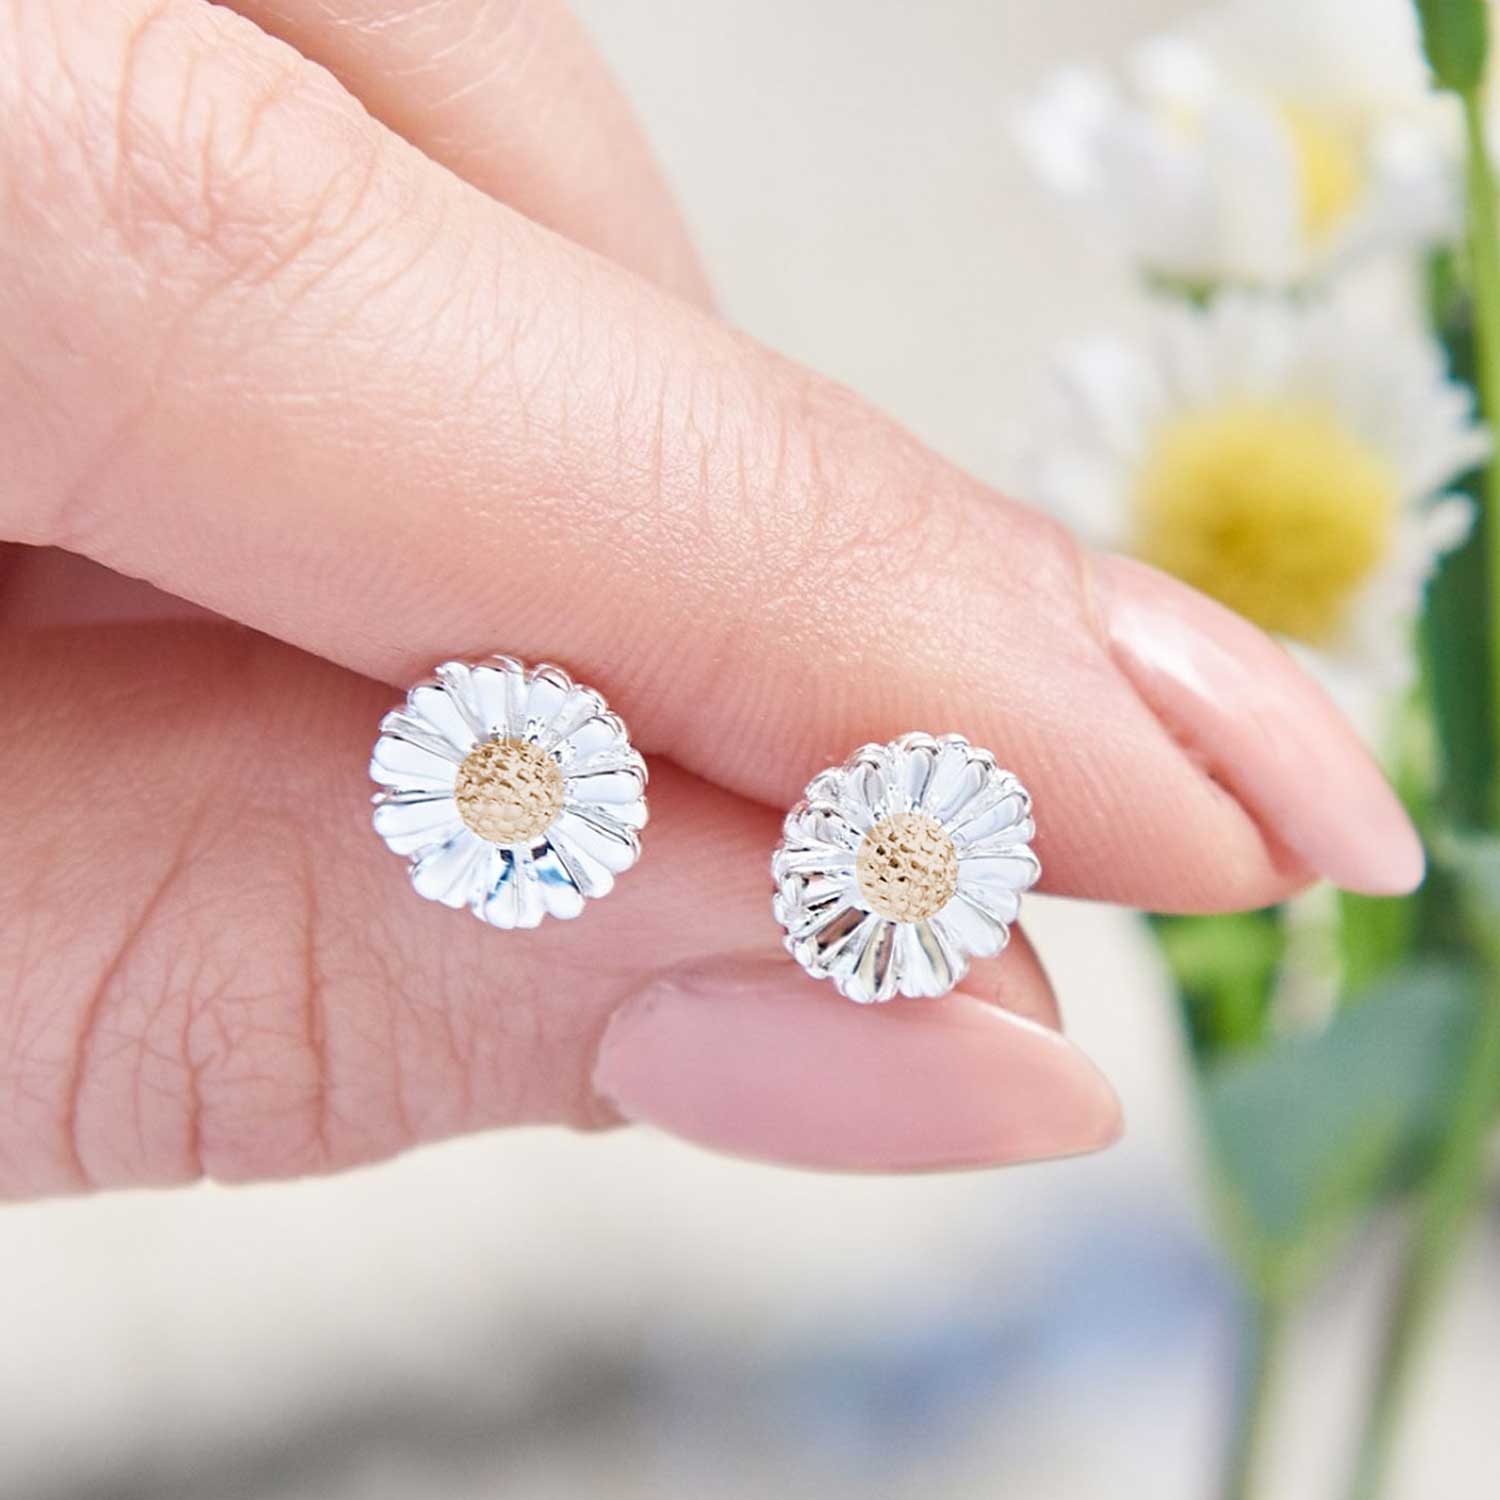 Daisy April Birth Flower Silver & Solid Gold Stud Earrings For Pierced Ears